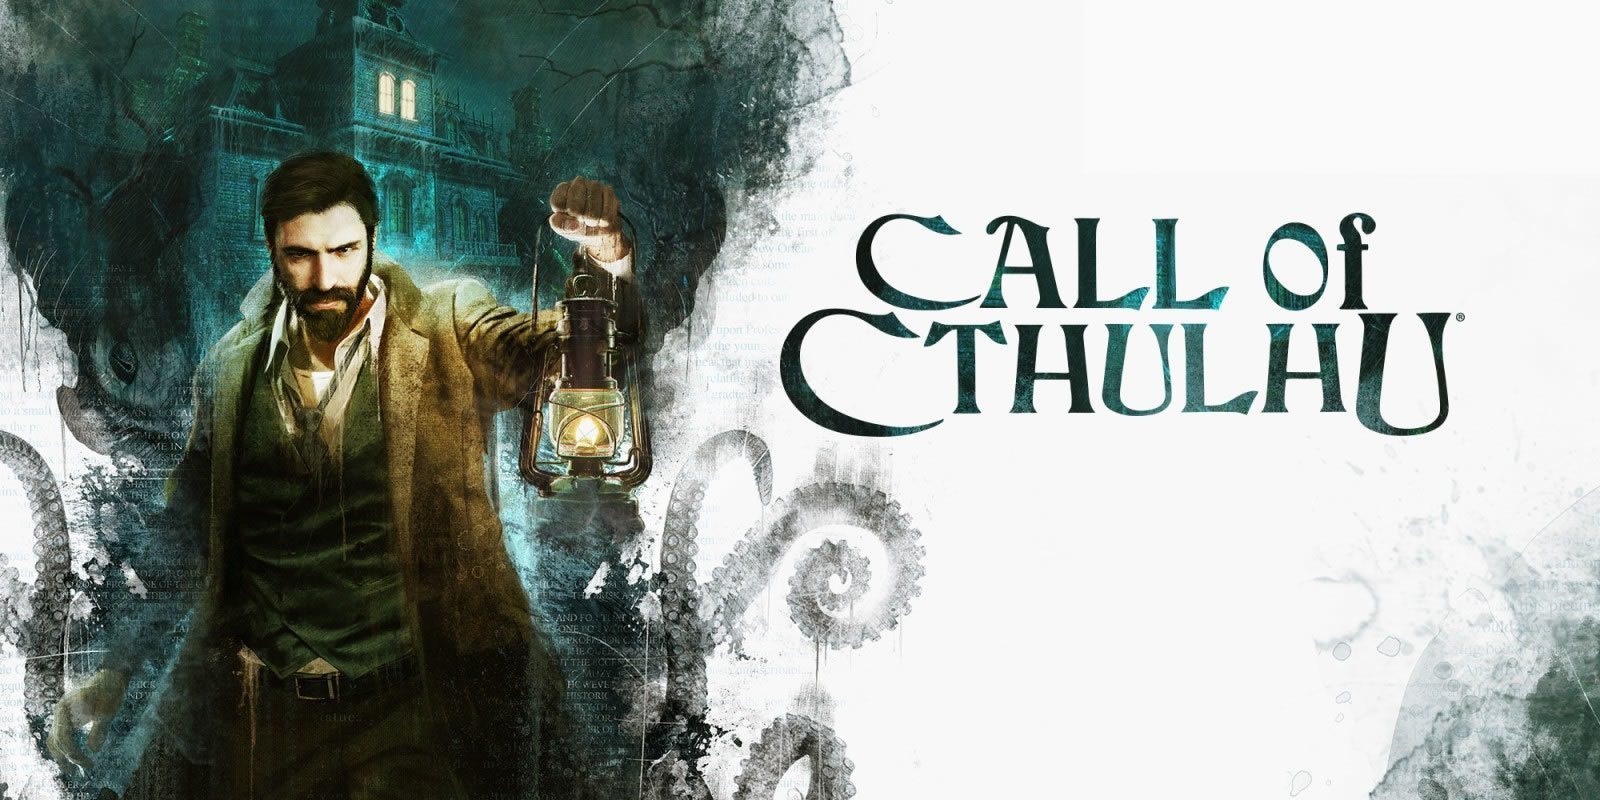 Análisis de 'Call of Cthulhu' para Nintendo Switch, corto, intenso y con mucha carga